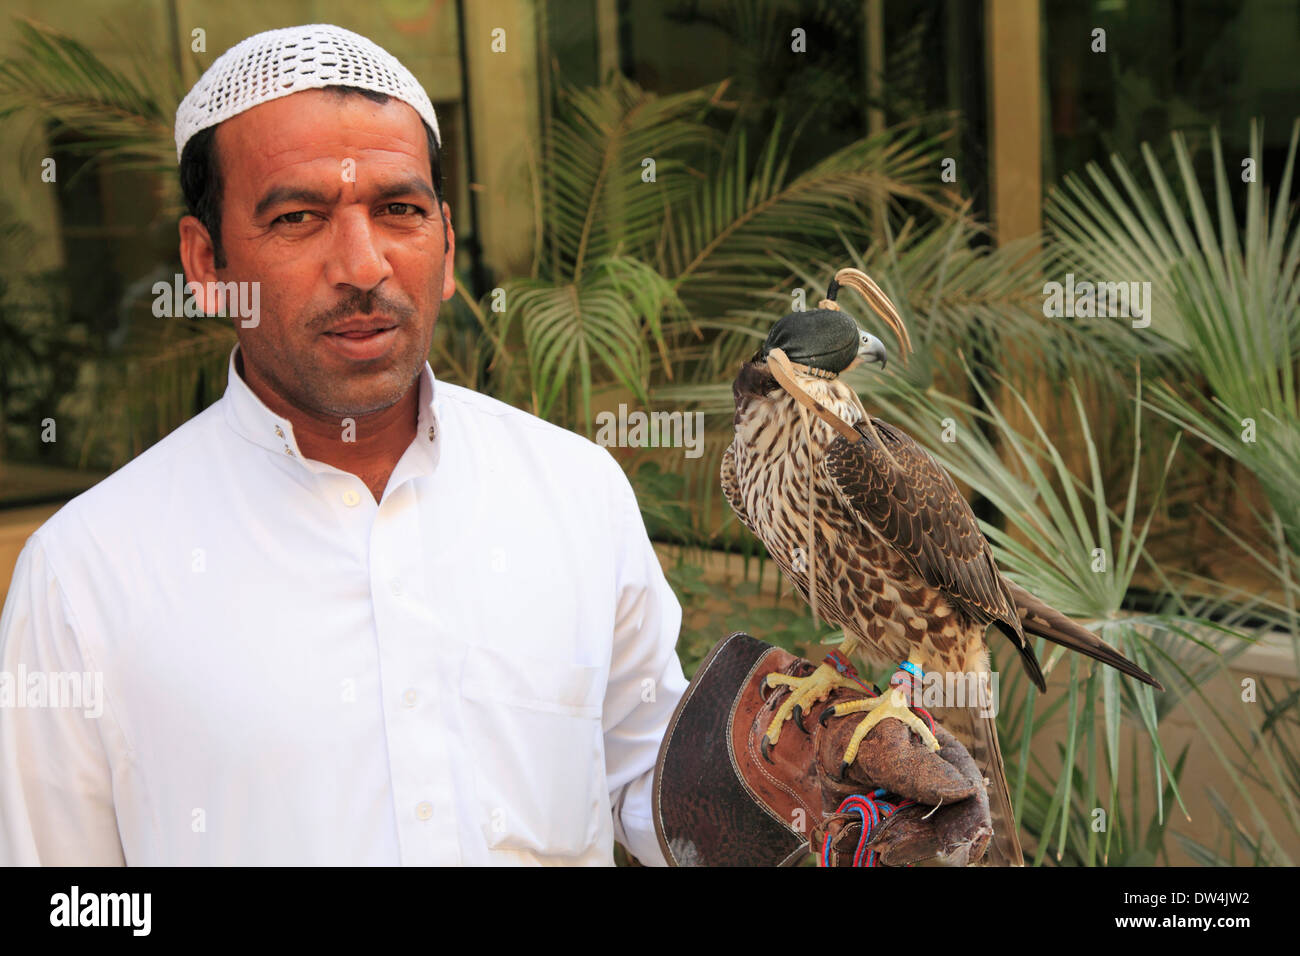 Qatar, Doha, Souq Waqif, man with falcon, Stock Photo